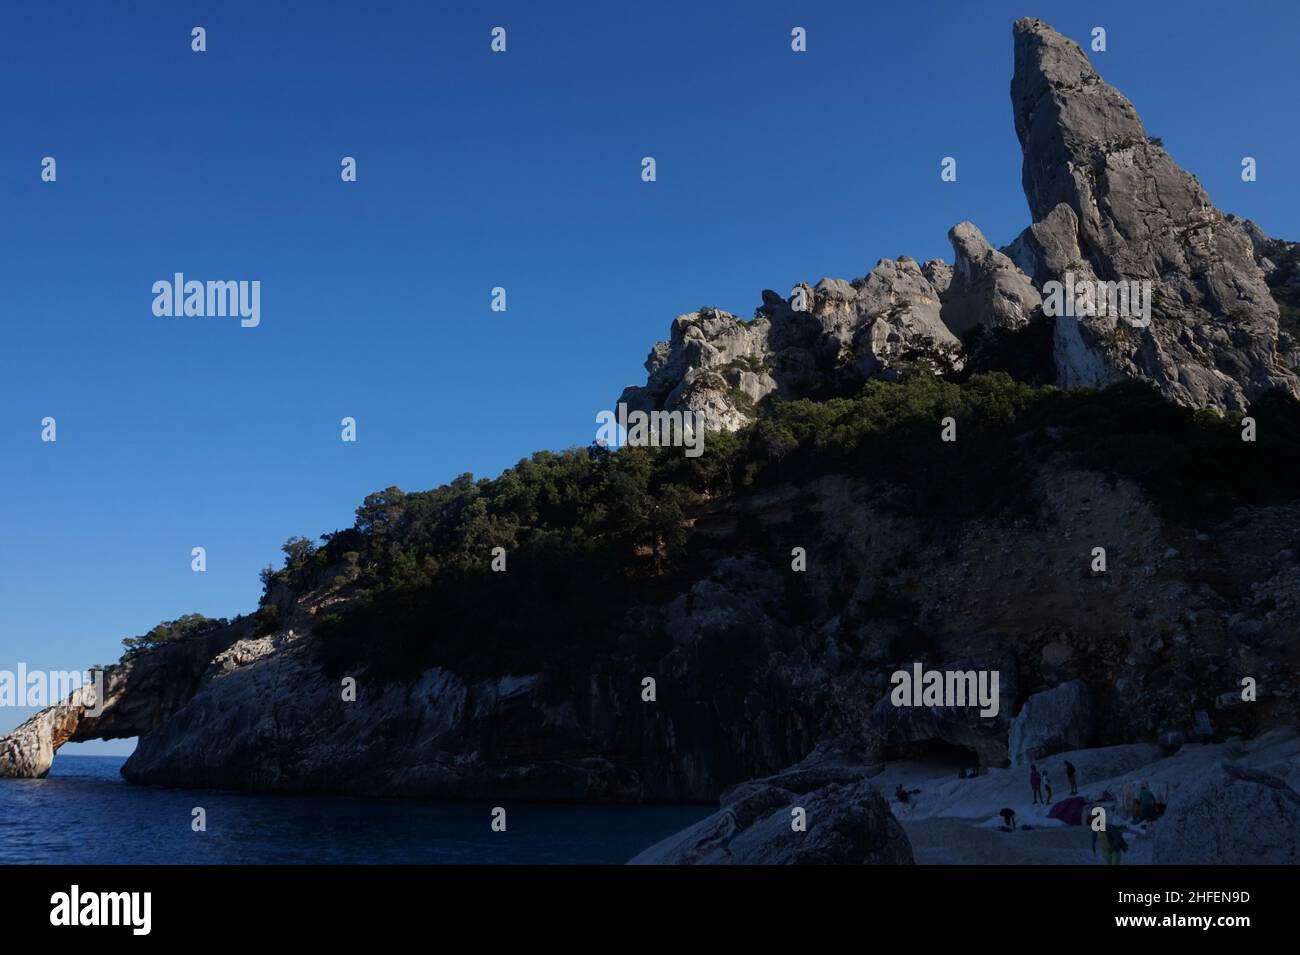 Cala Gloloritze, the steepest rock needle of the world? Stock Photo